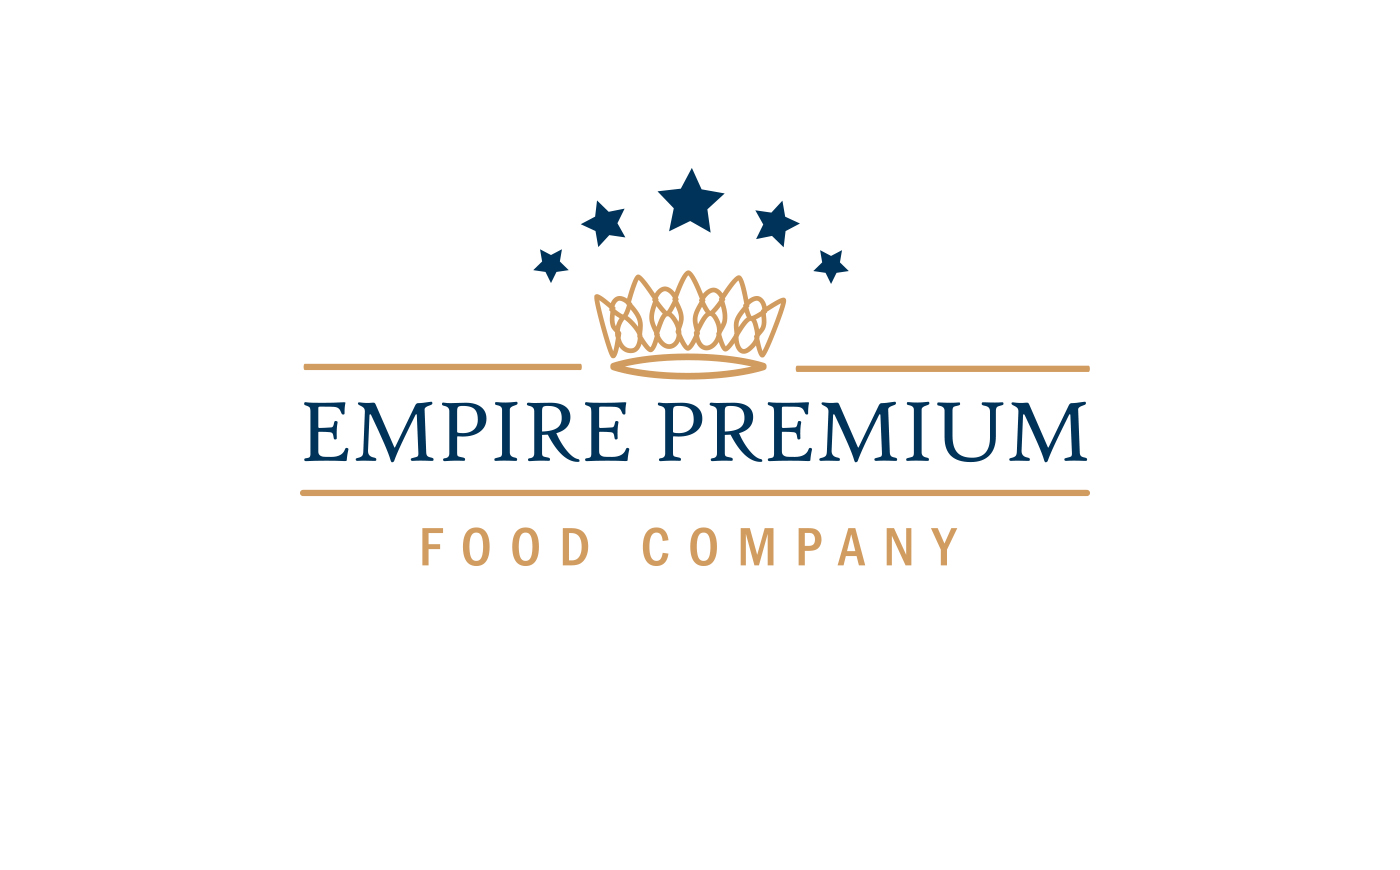 Empire Premium Food Company